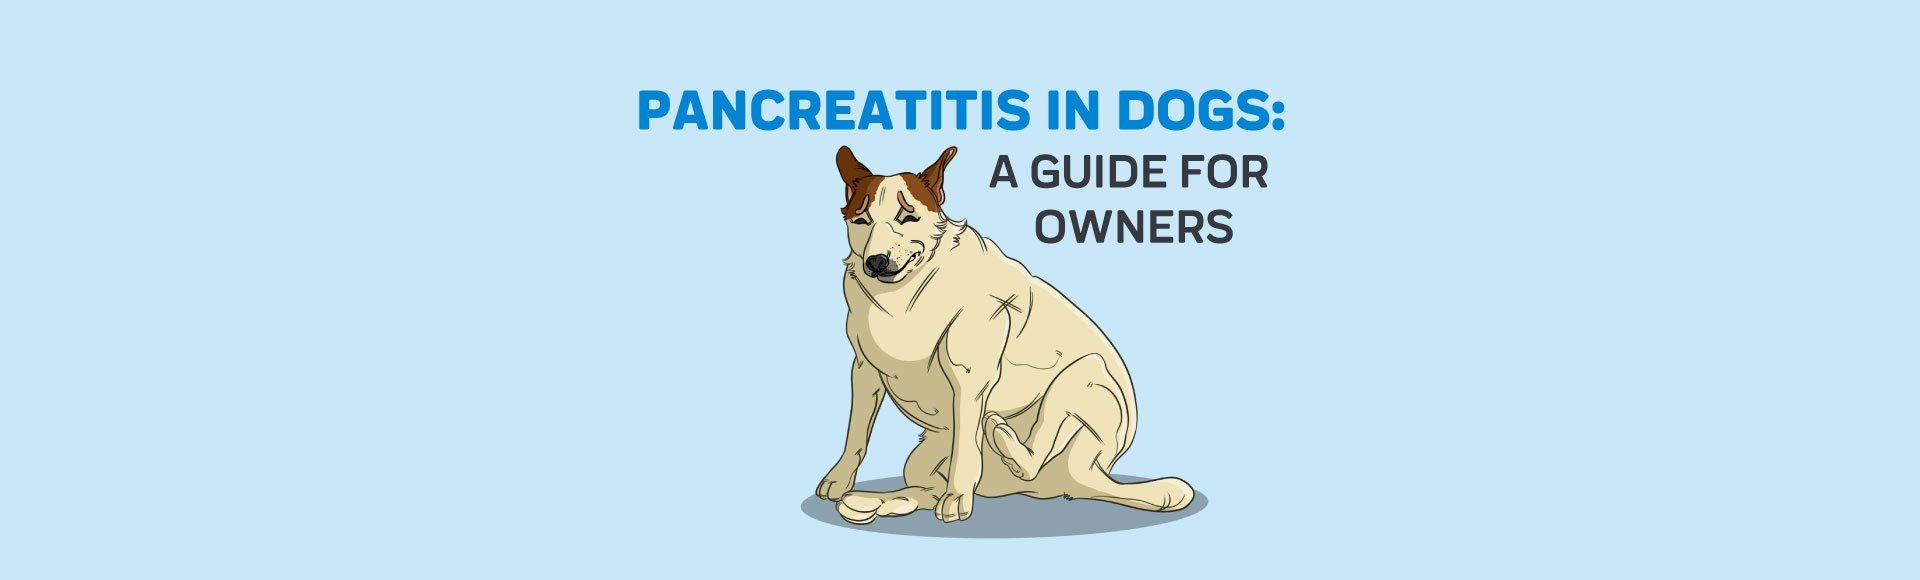 can pancreatitis cause seizures in dogs